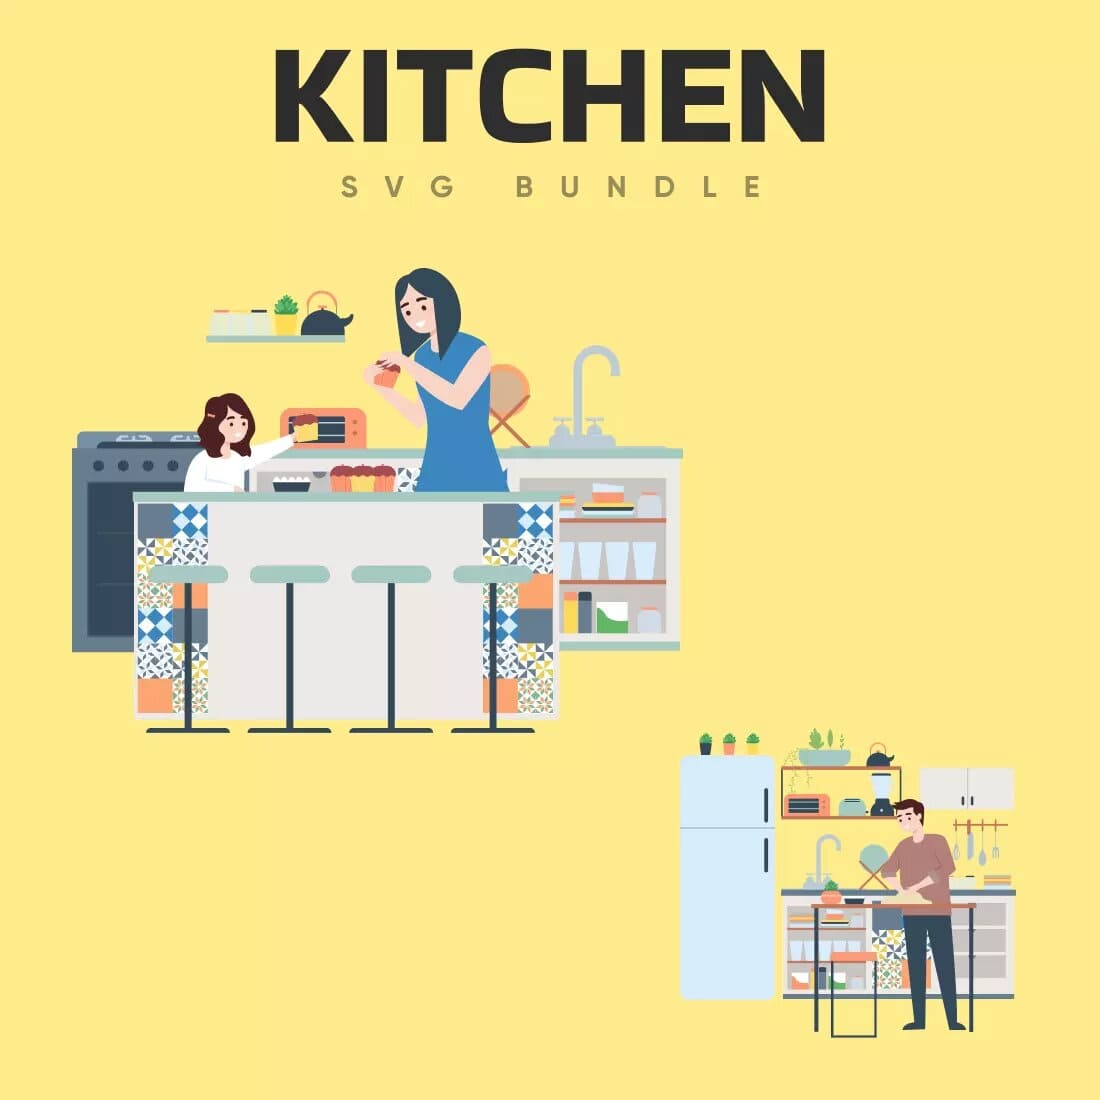 Kitchen SVG Bundle Preview 5.